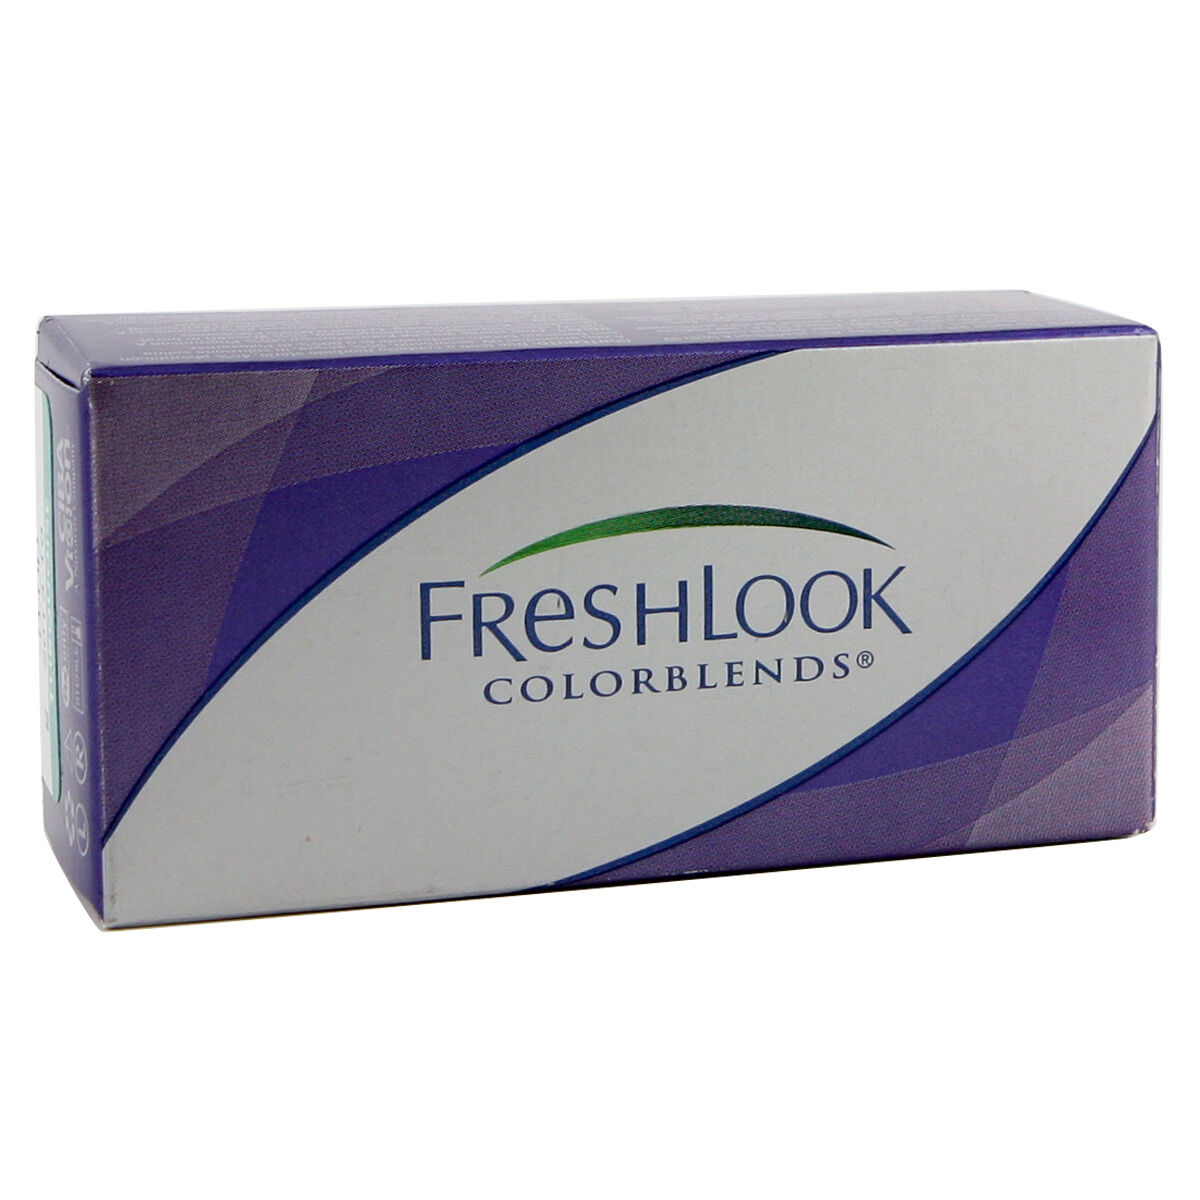 Alcon Freshlook Colorblends (2 Contact Lenses), Pure Hazel, Ciba Vision/Alcon, Monthly Coloured Lenses, Phemfilcon A